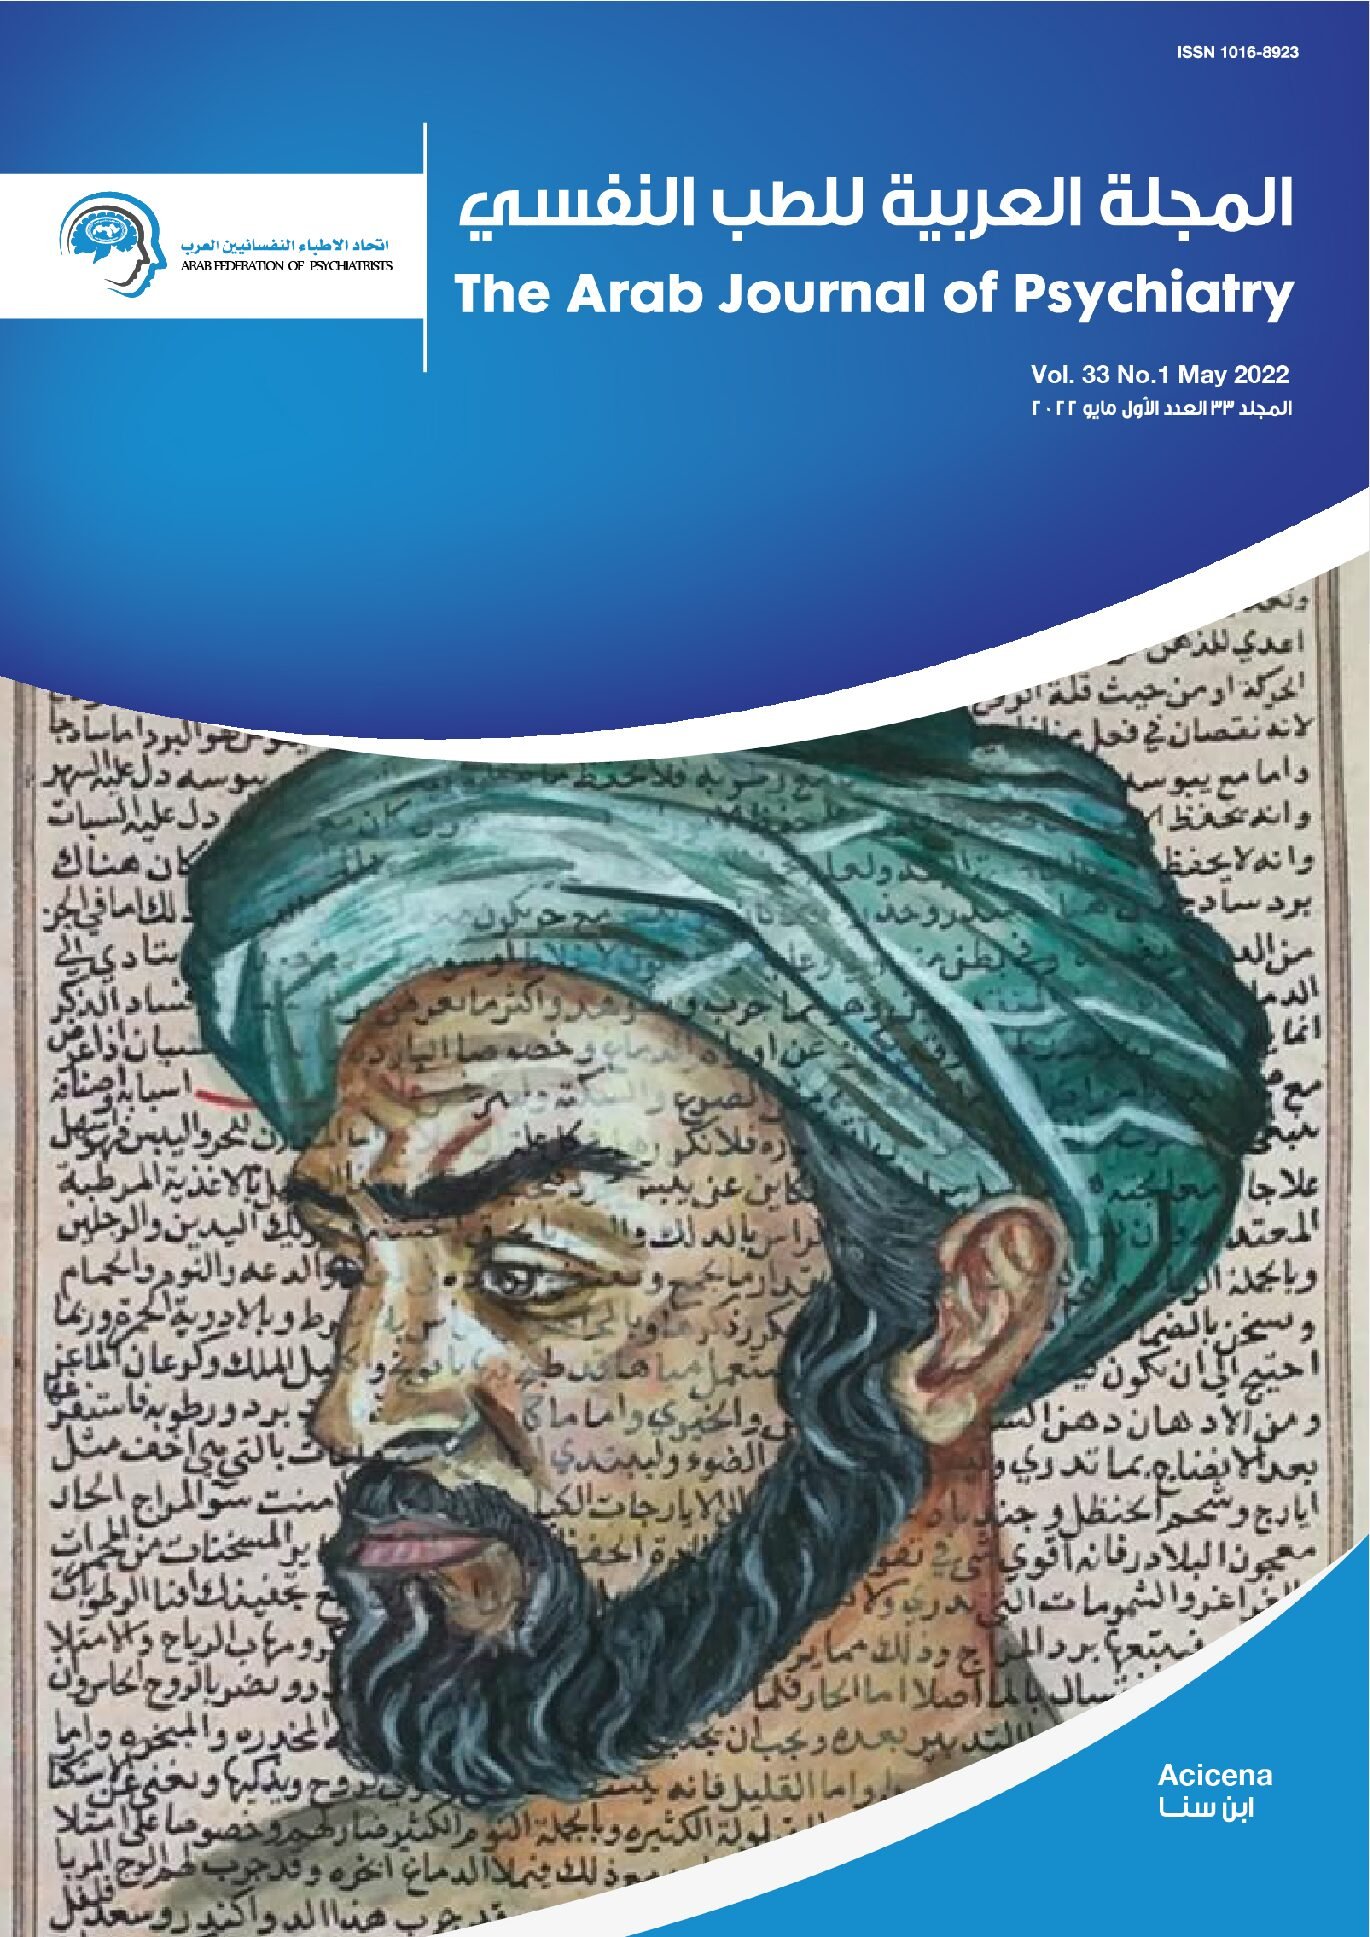 The Arab Journal of Psychiatry (2022) Vol. 33 No.1